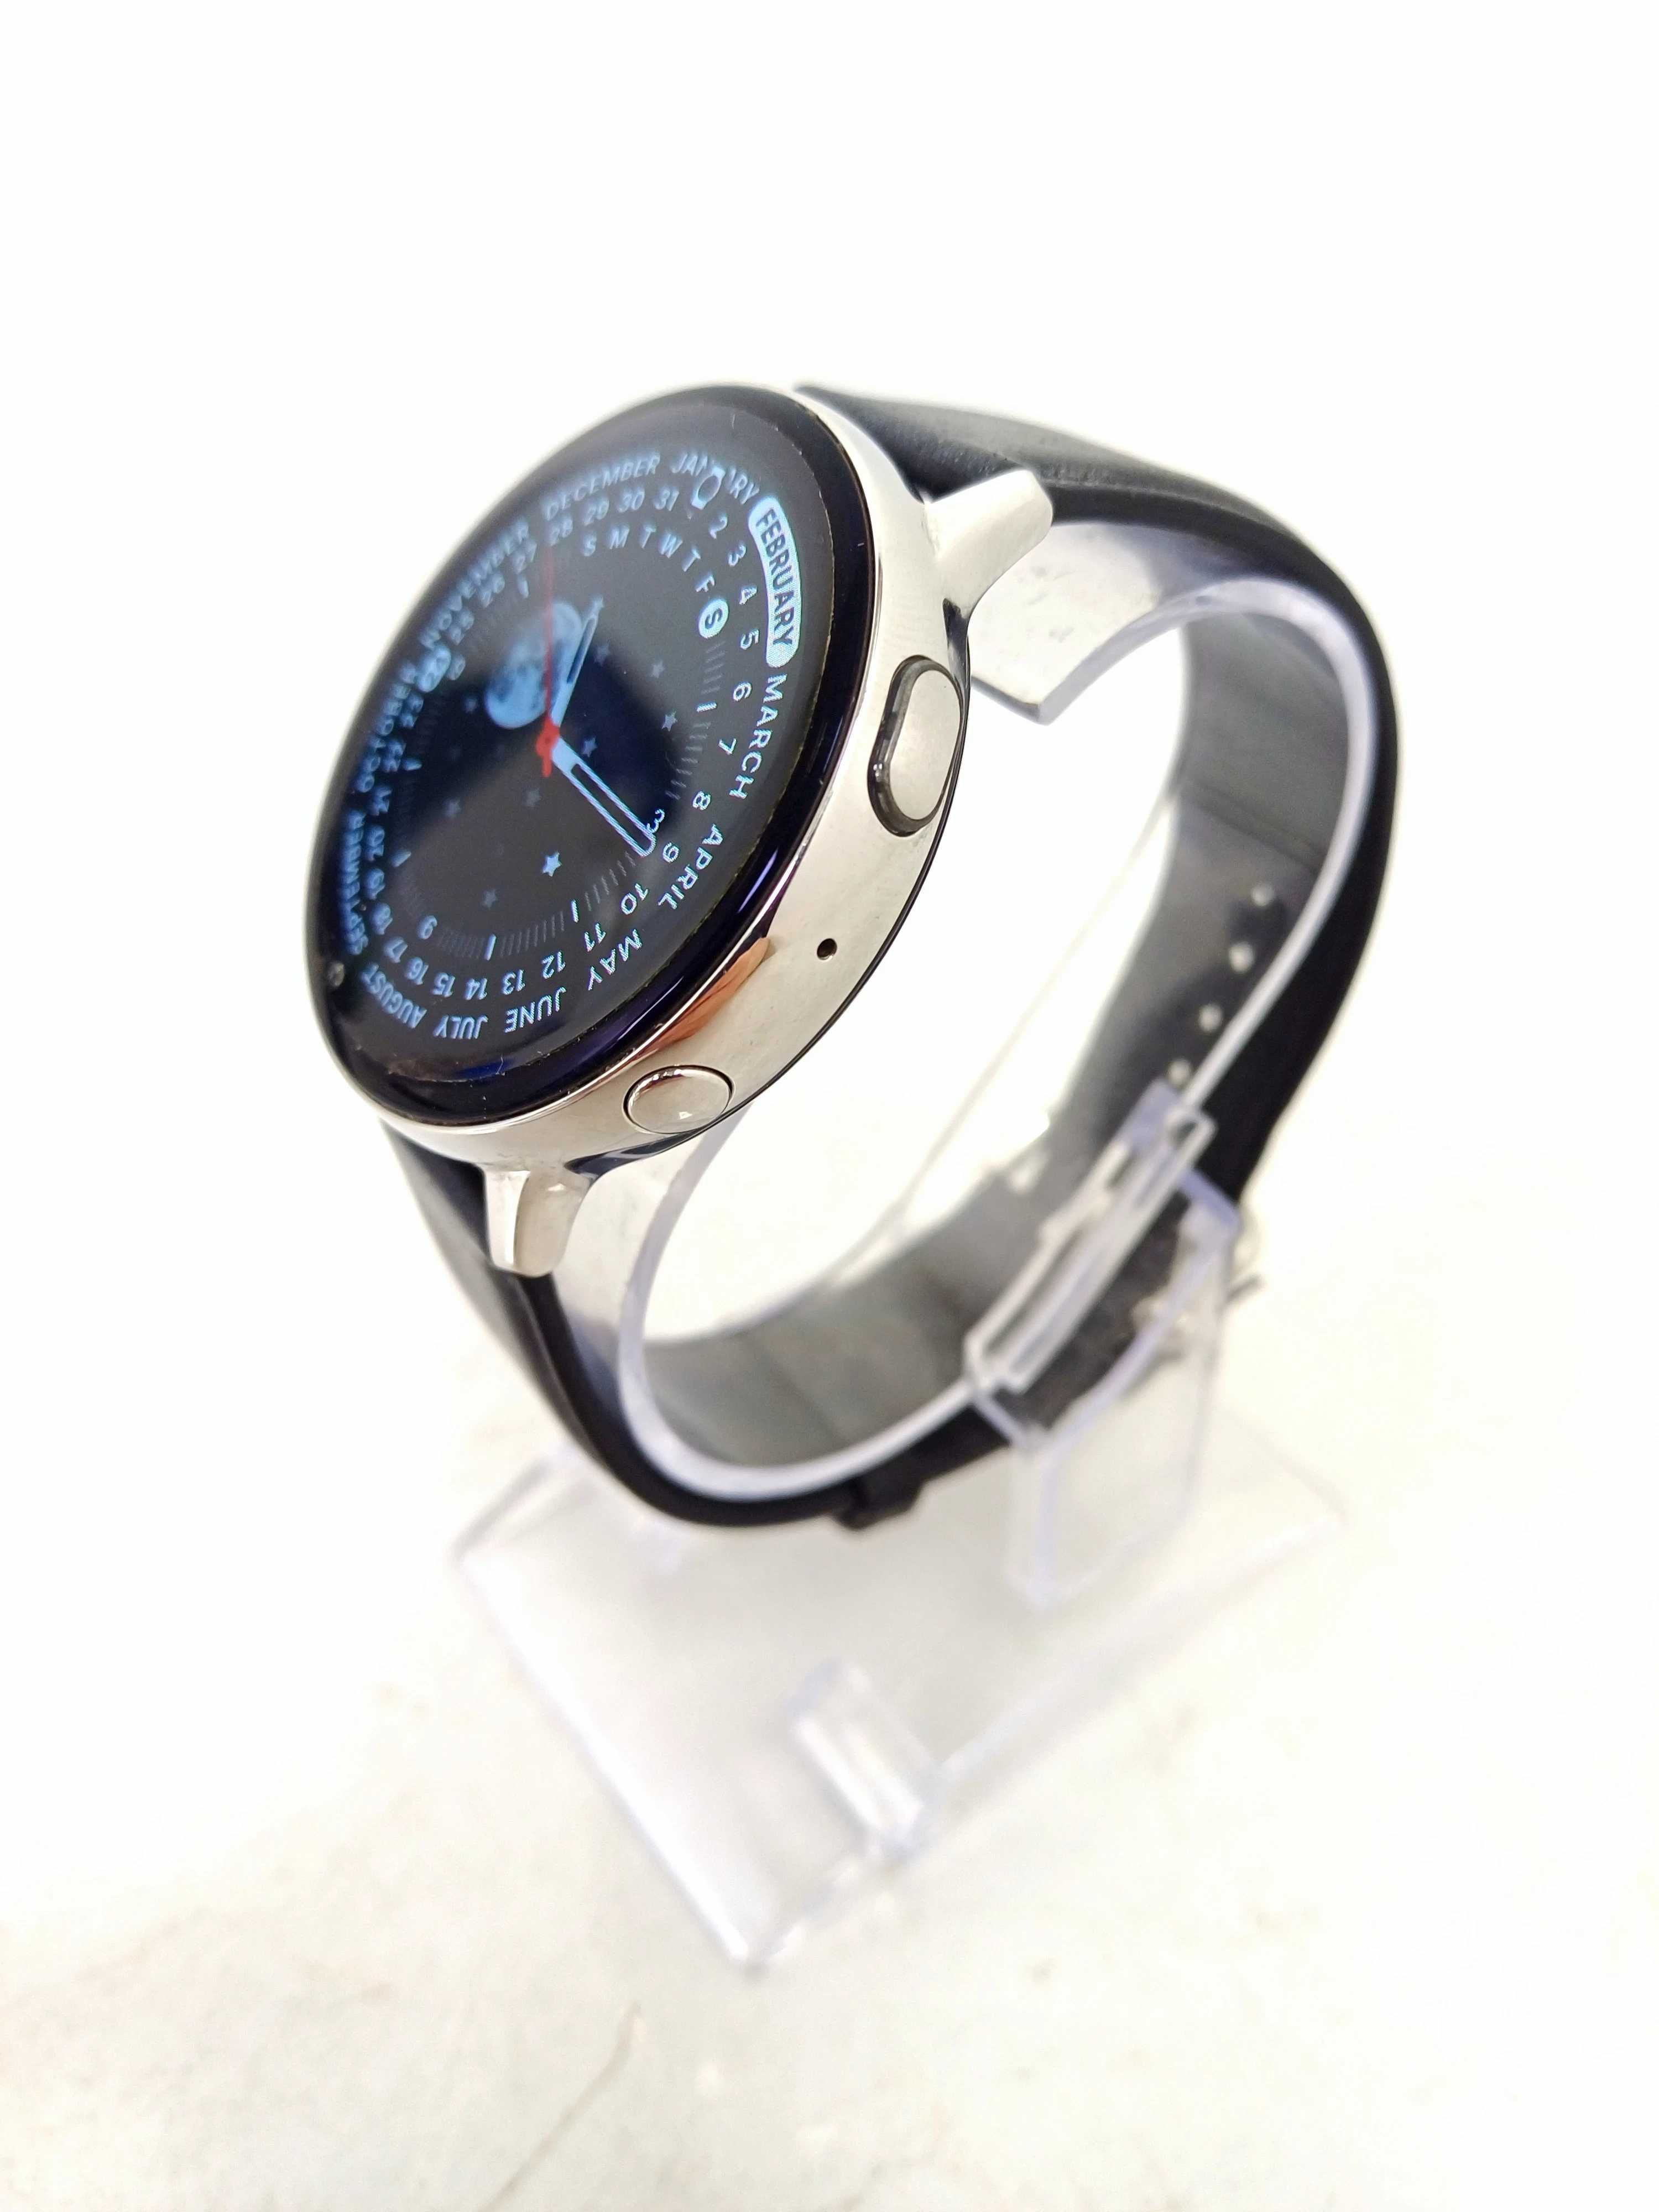 Smartwatch Samsung ACTIVE 2 komplet